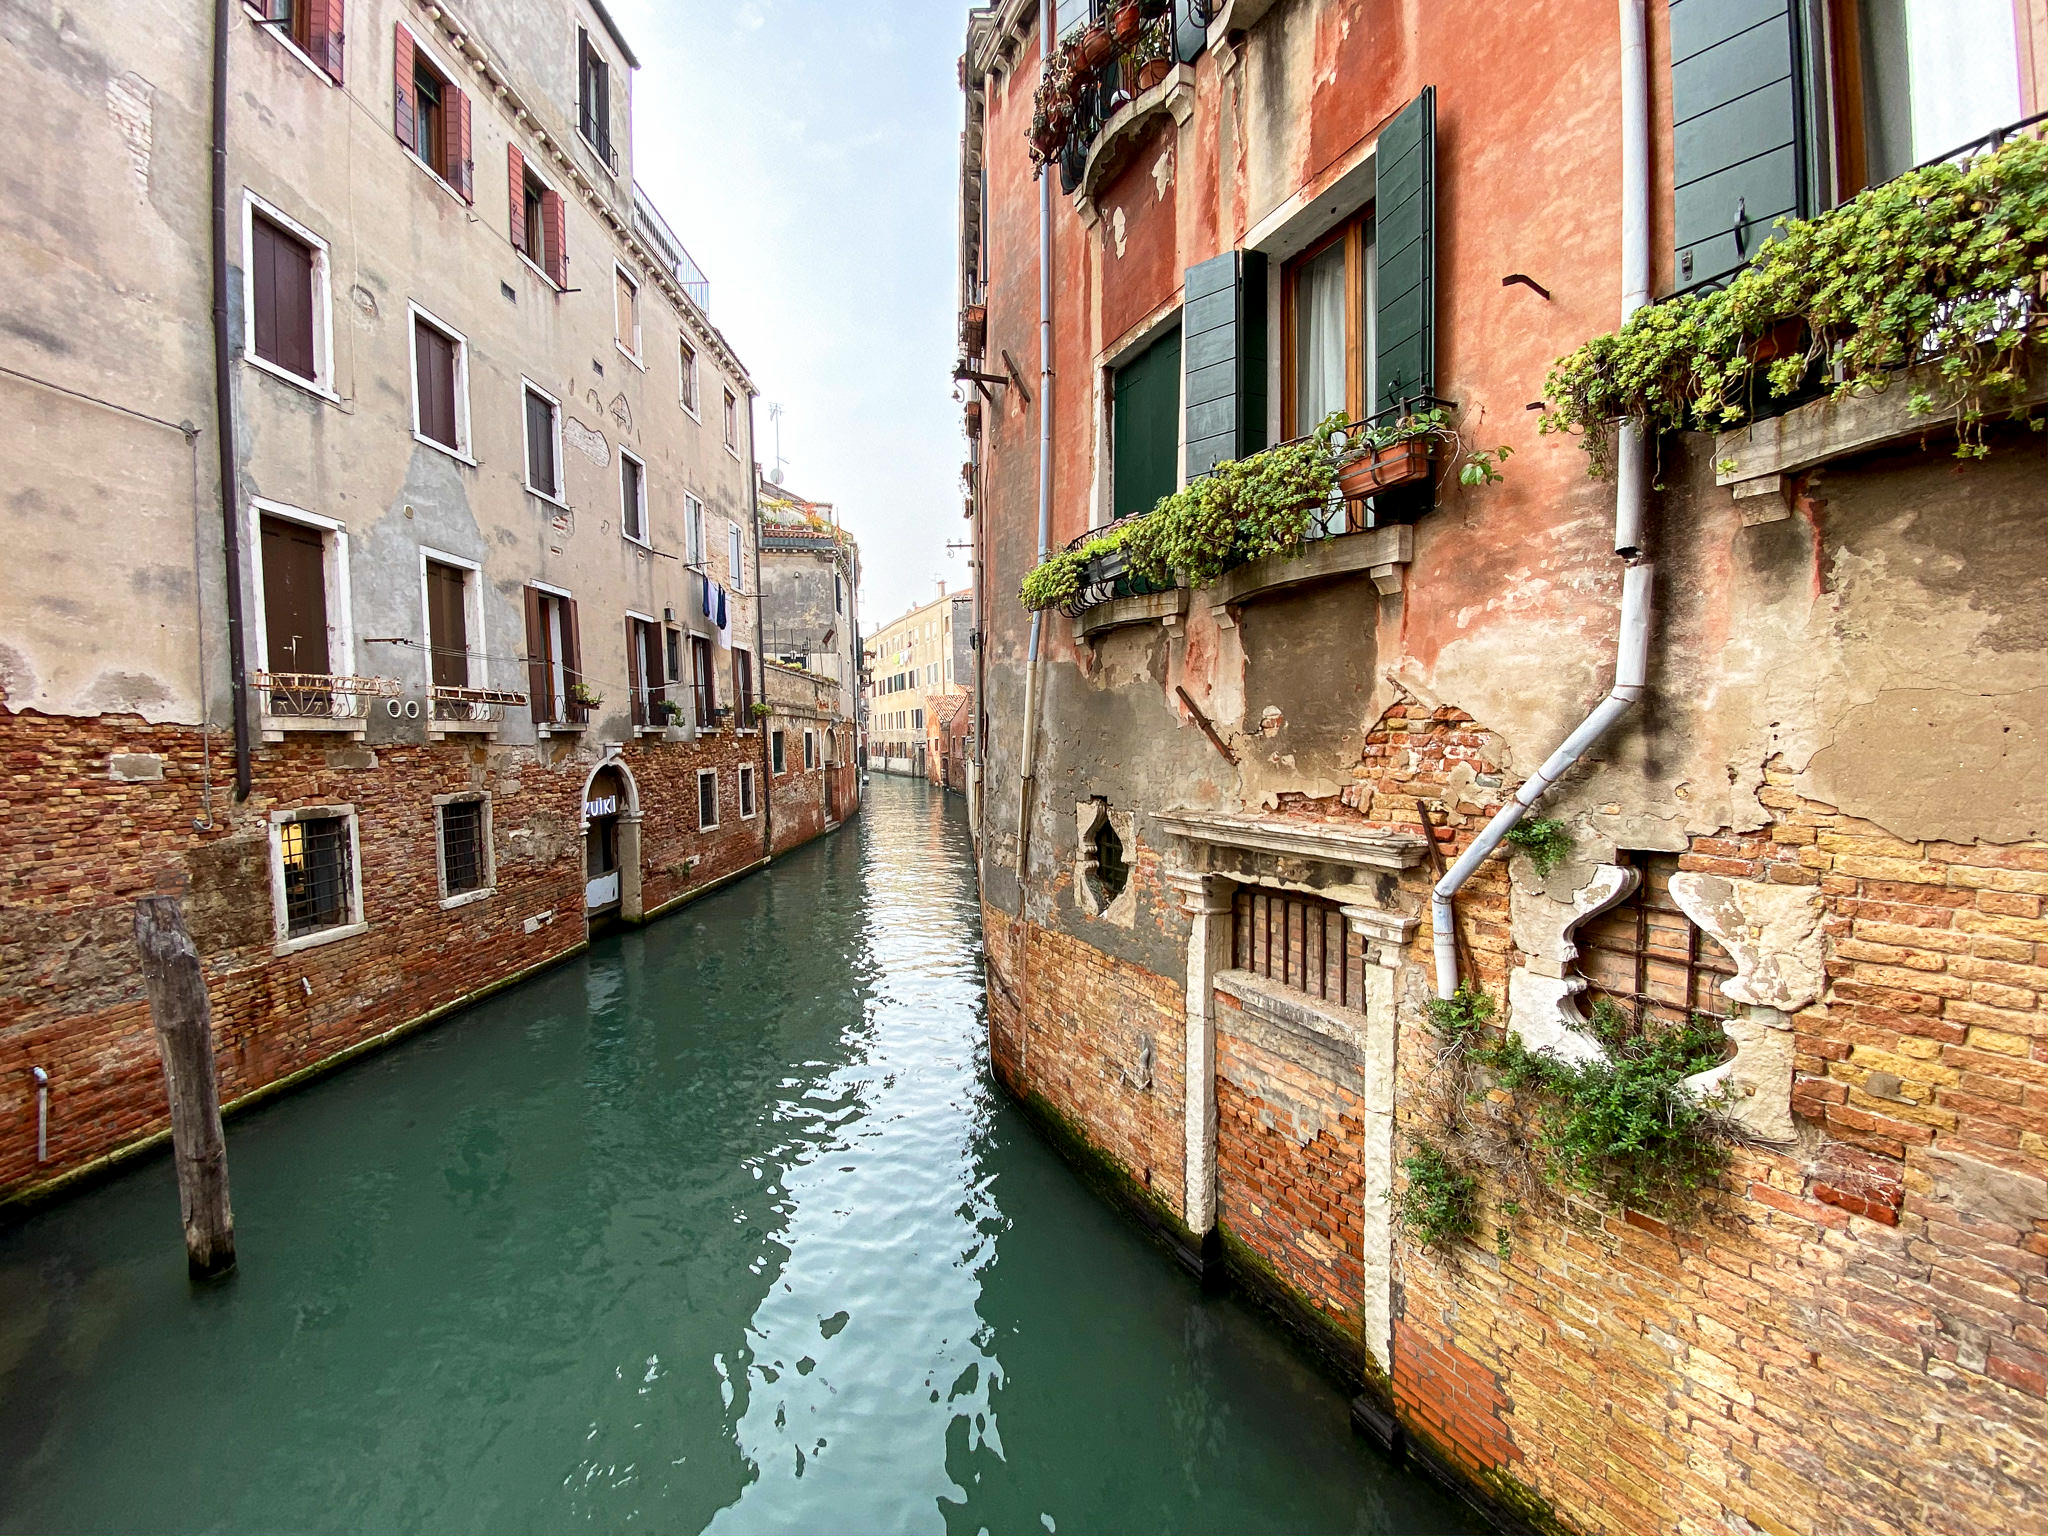 Venice, Italy iPhone 11 Pro Max @ 1.54mm, ISO 20, 1/180, f/2.4.